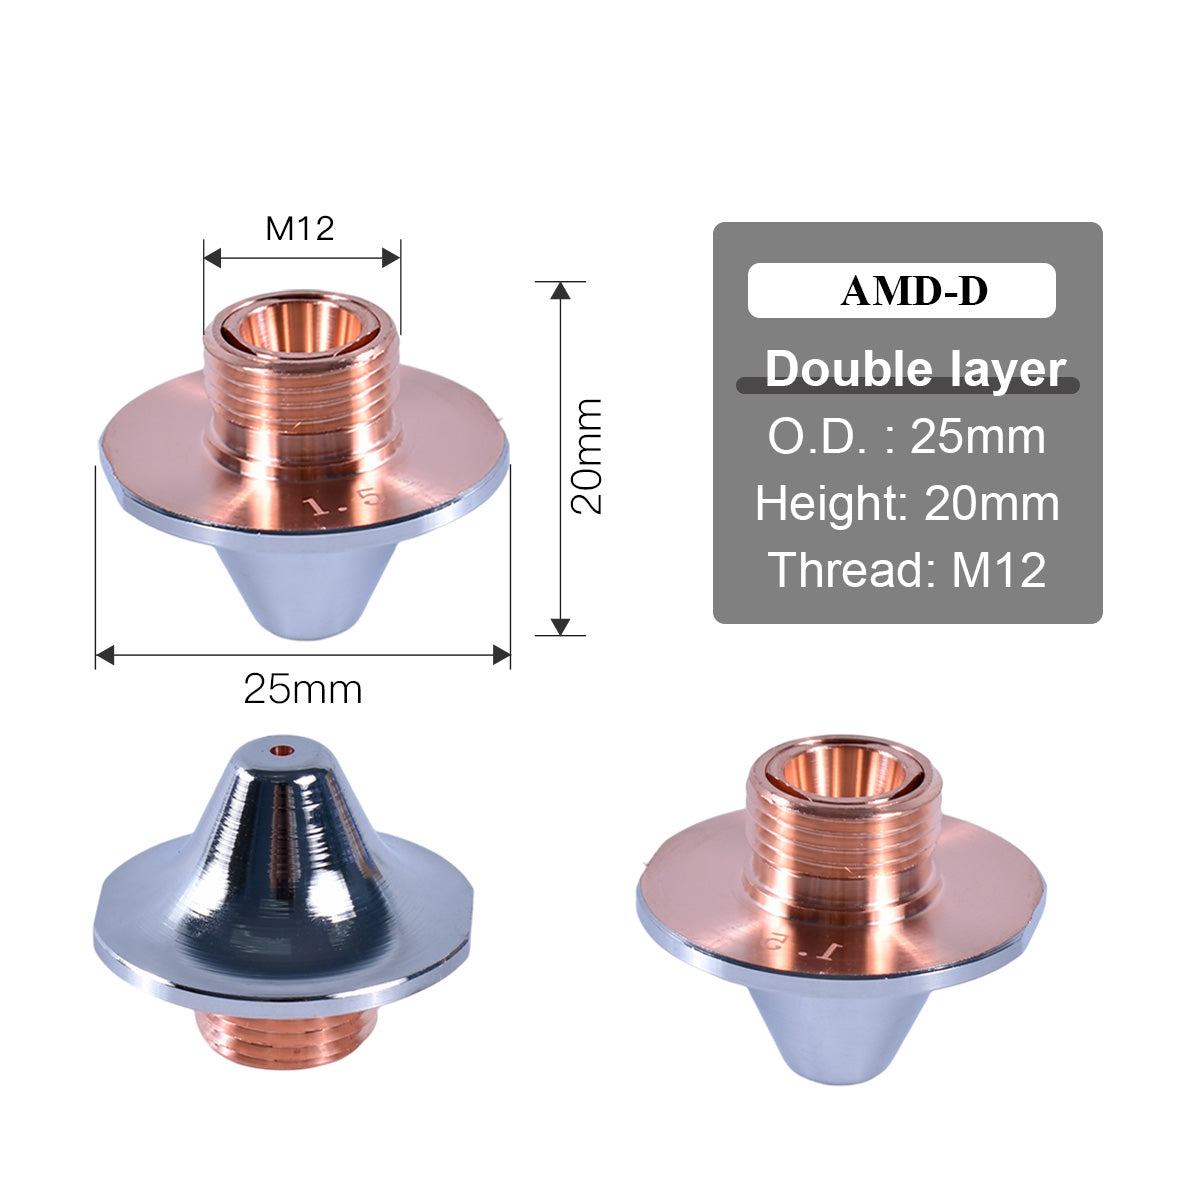 Startnow AMADA Laser Nozzle For Optical Fiber Metal Cutting Machine Head Fitting